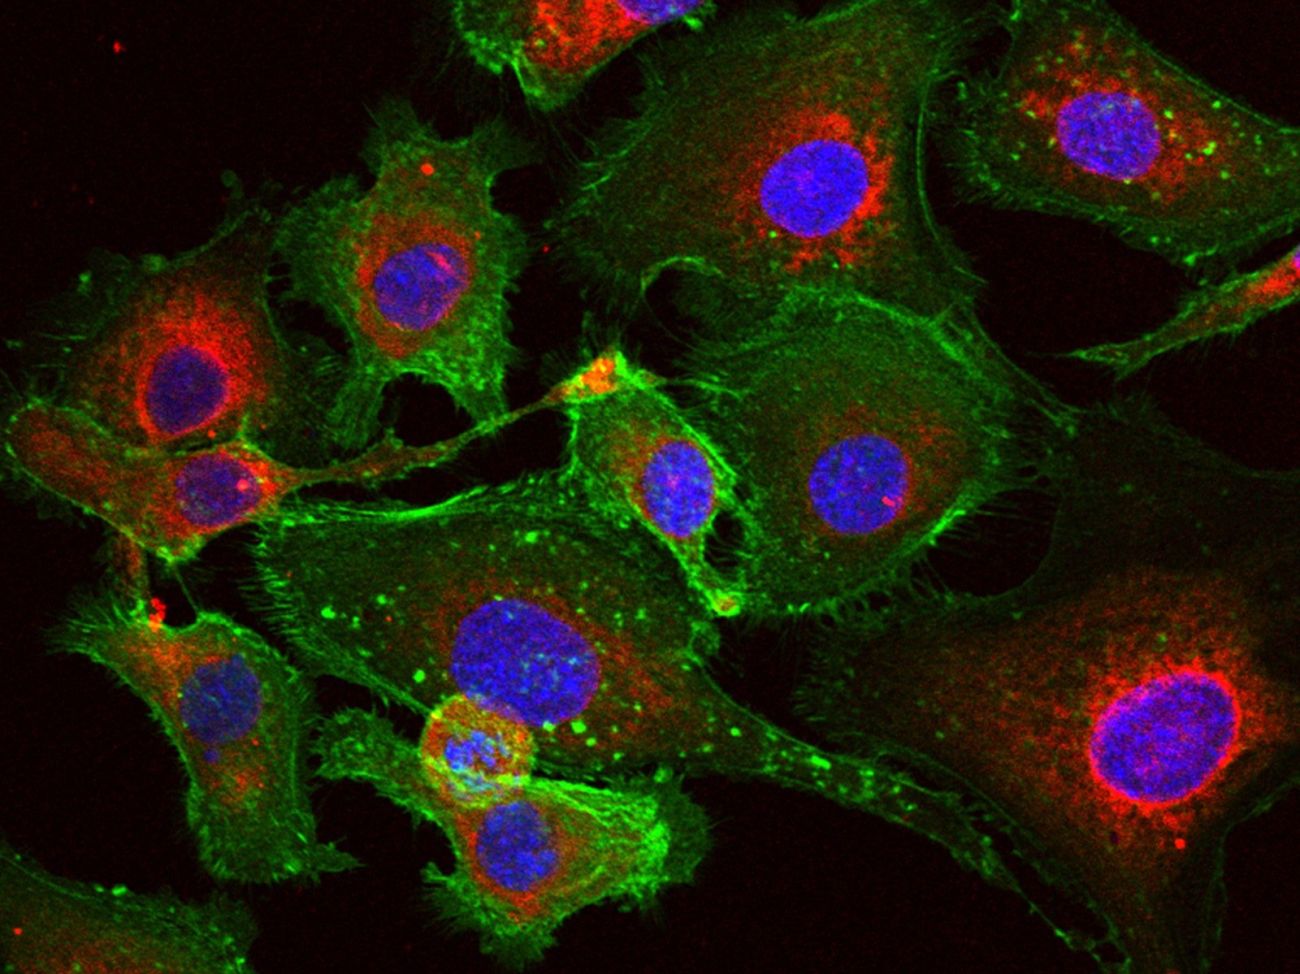 Ovarian cancer cells under a microscope